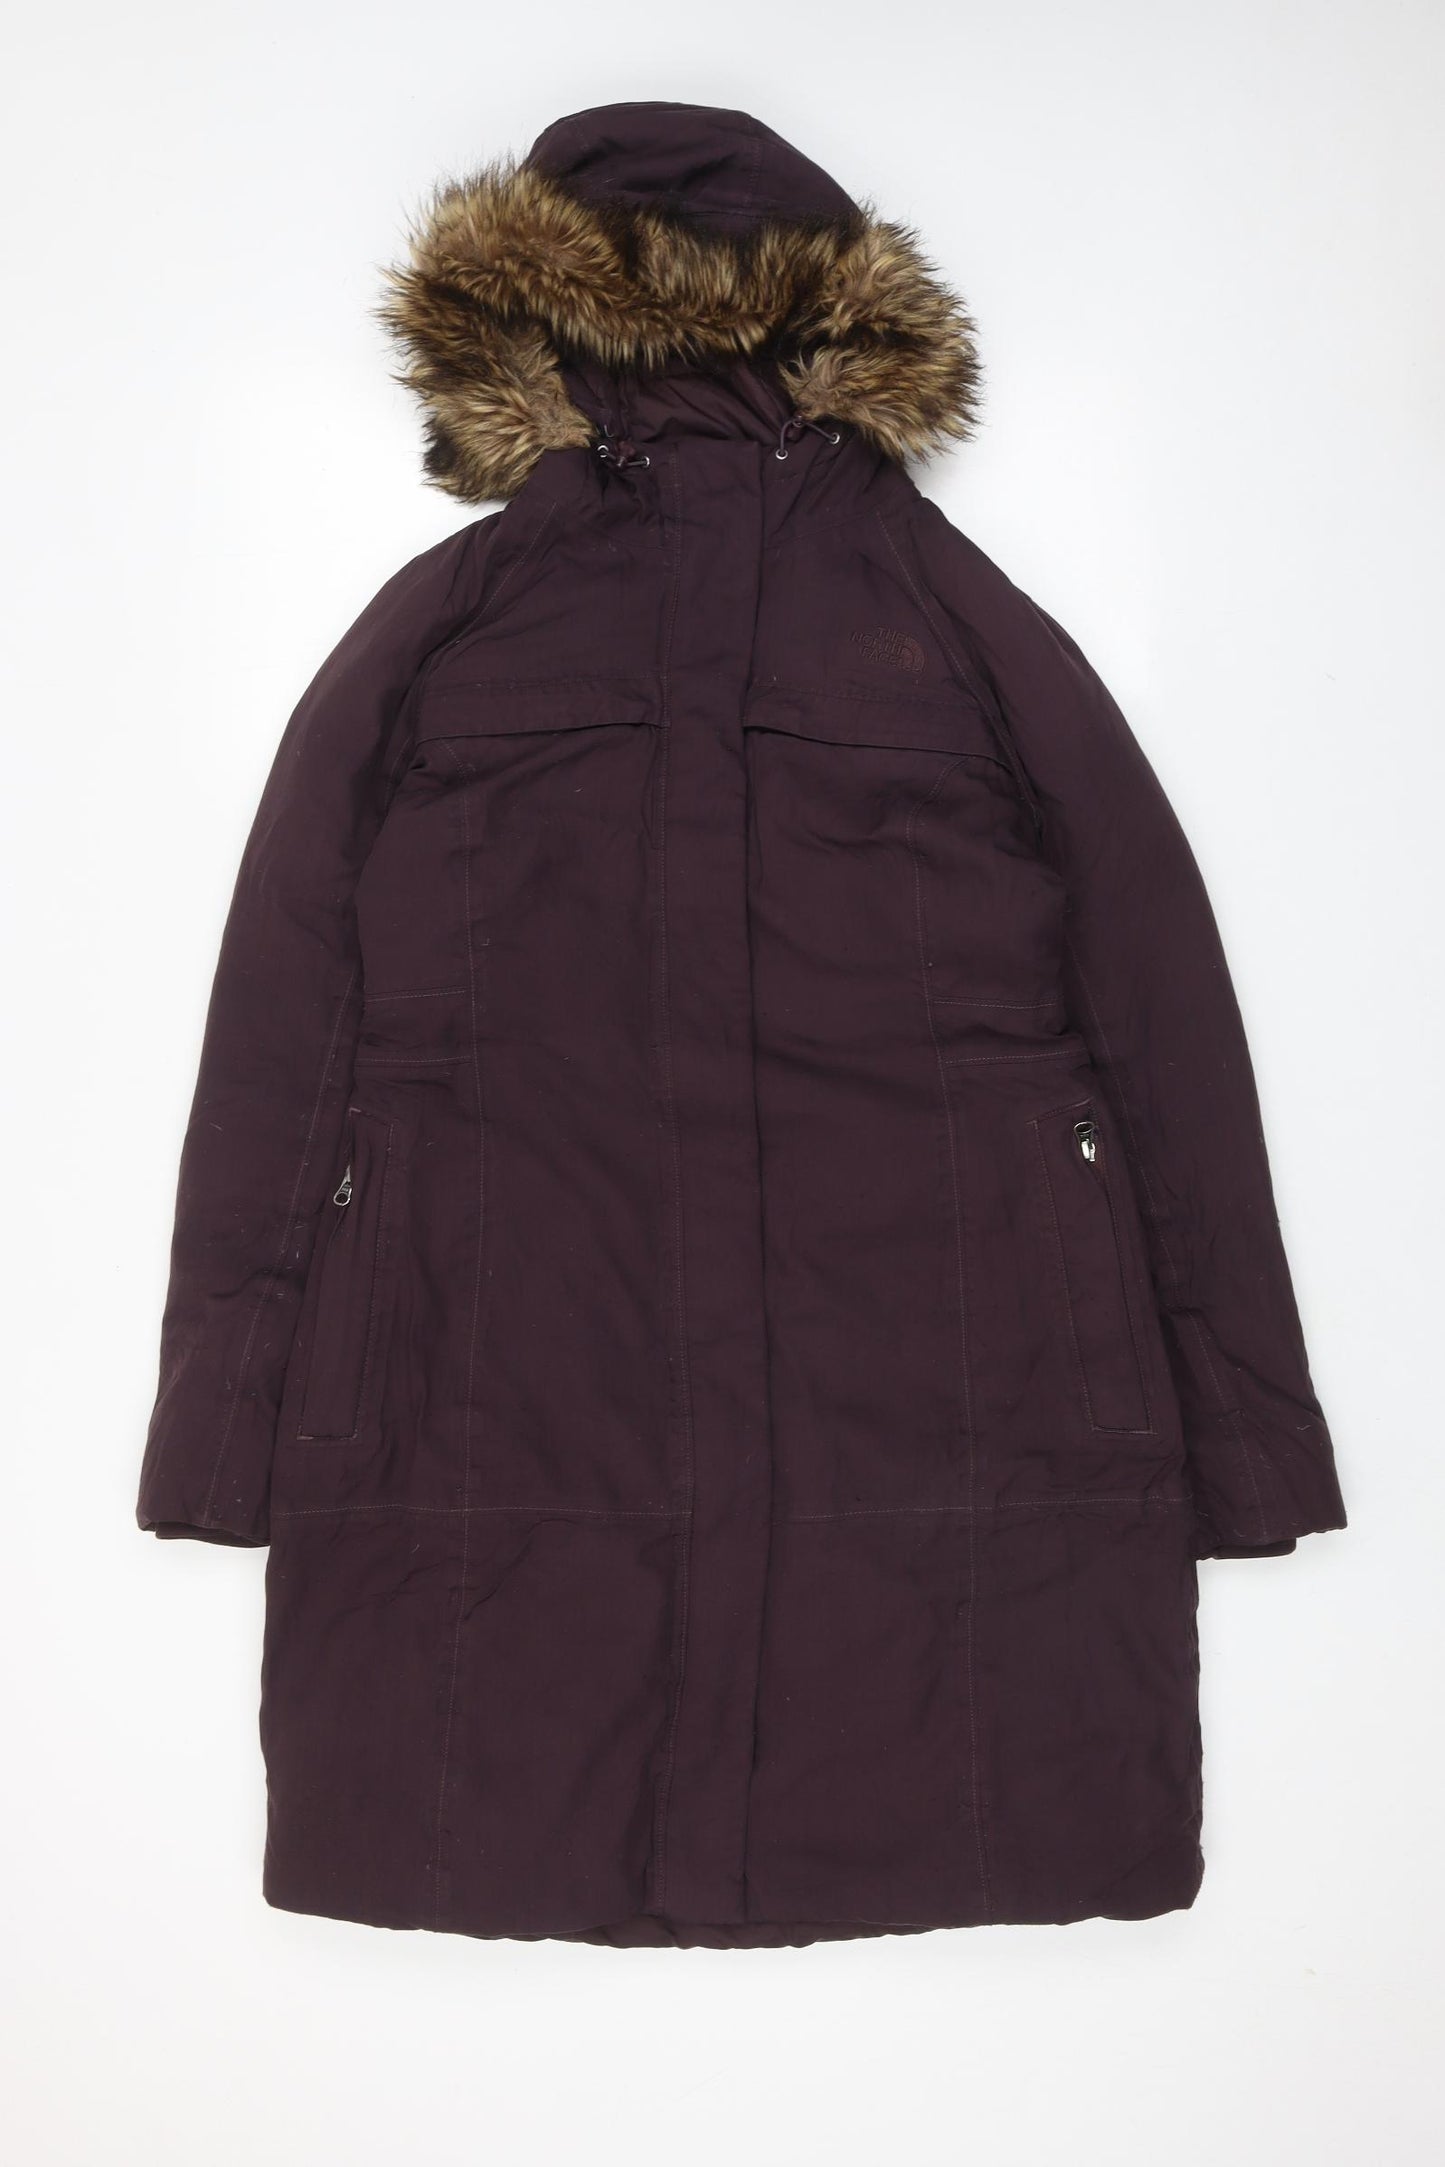 The North Face Womens Purple Parka Coat Size M Zip